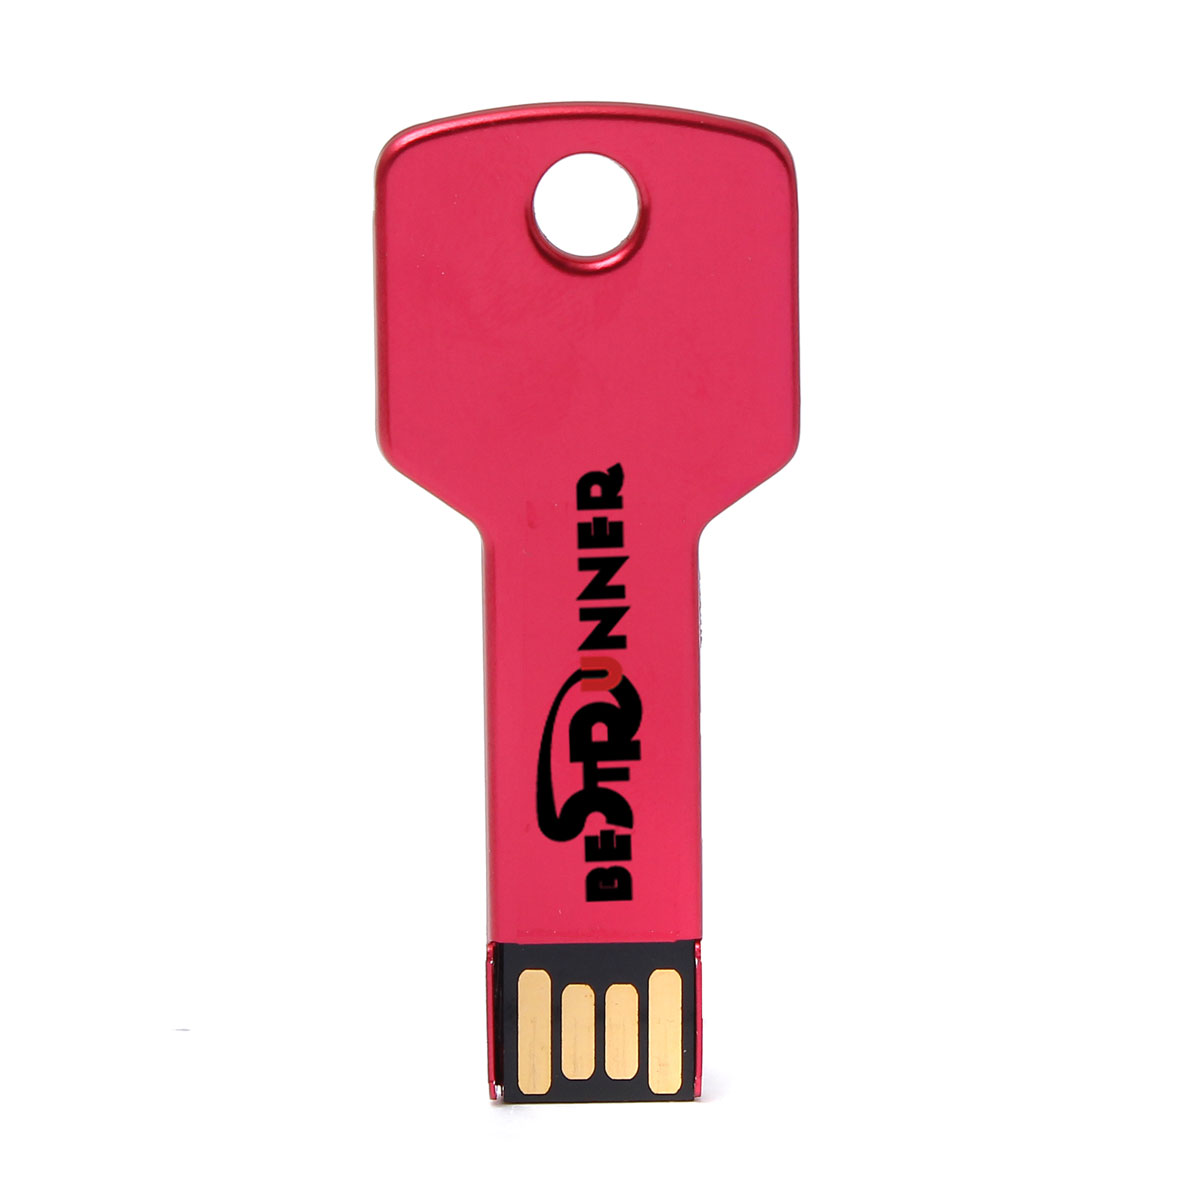 Bestrunner-2GB-USB-Metal-Key-Drive-Flash-Memory-Drive-Thumb-Design-48486